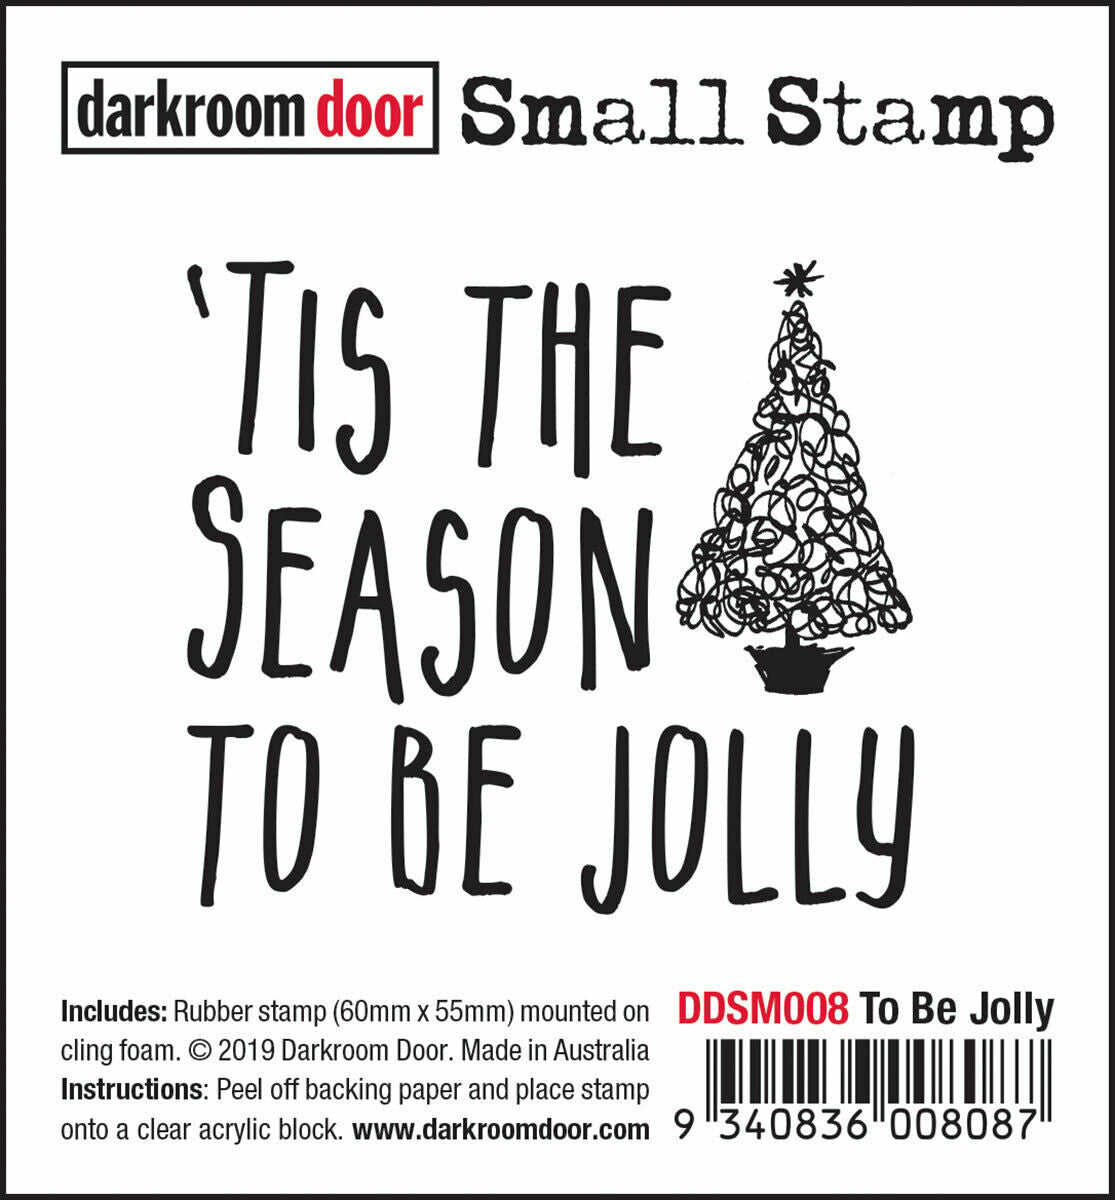 Darkroom Door Small Stamp To Be Jolly Rubber 55mm x 60mm